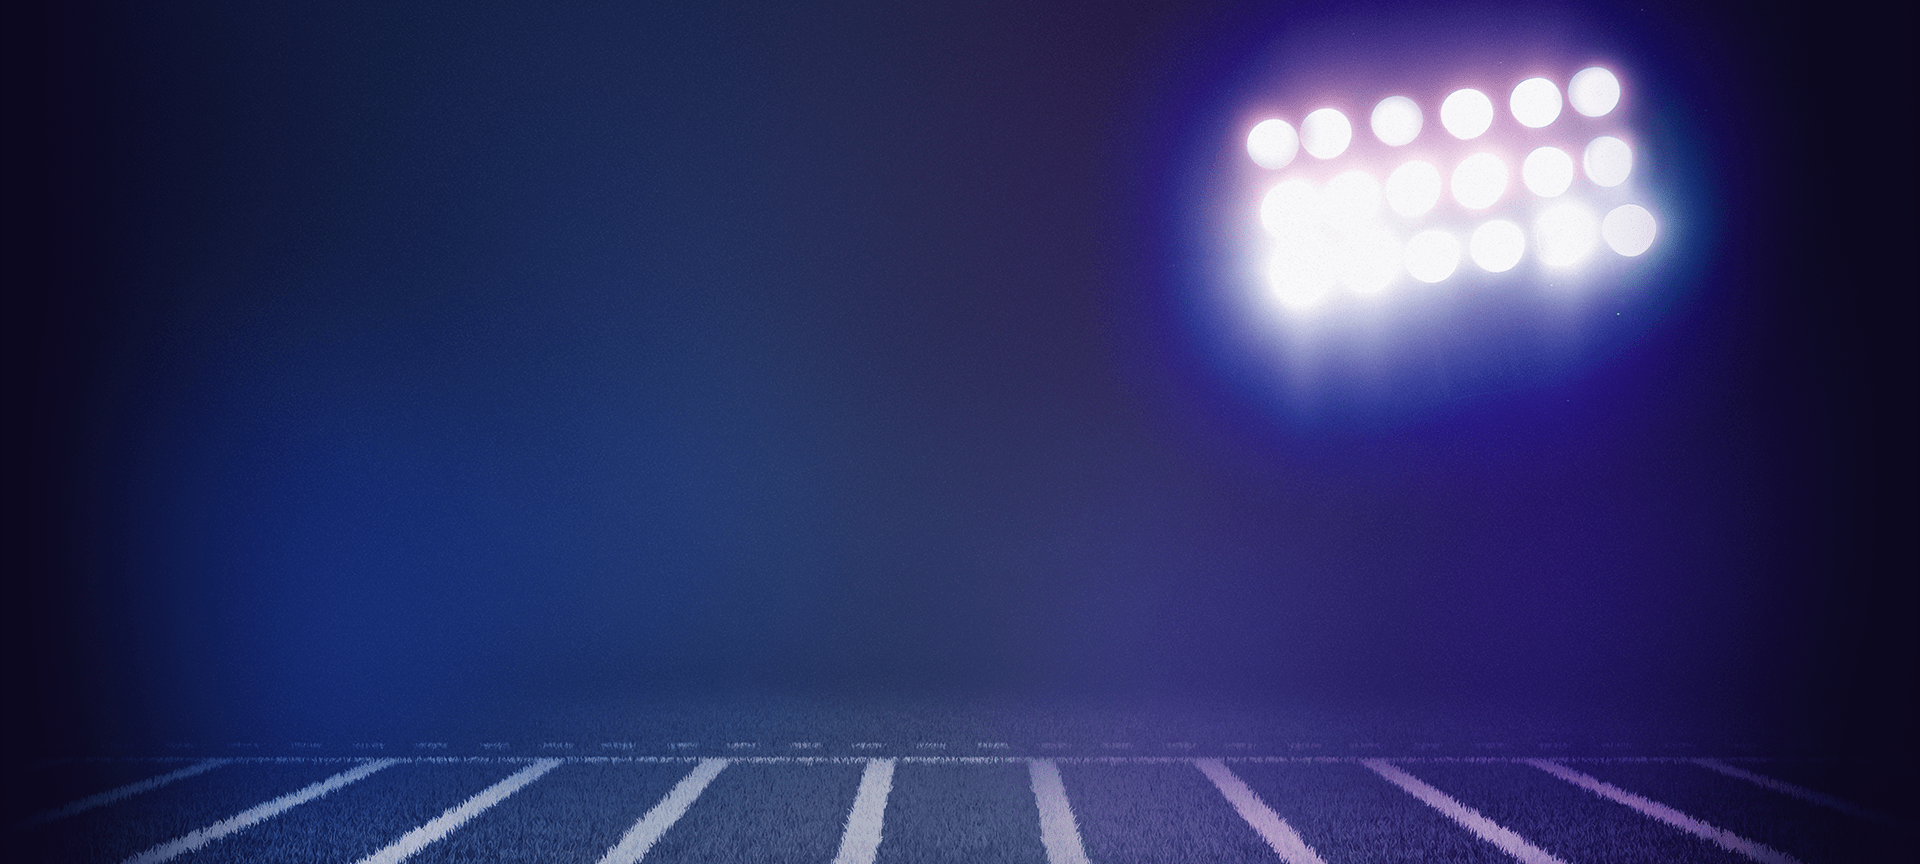 Background of football field with stadium lights illuminating it